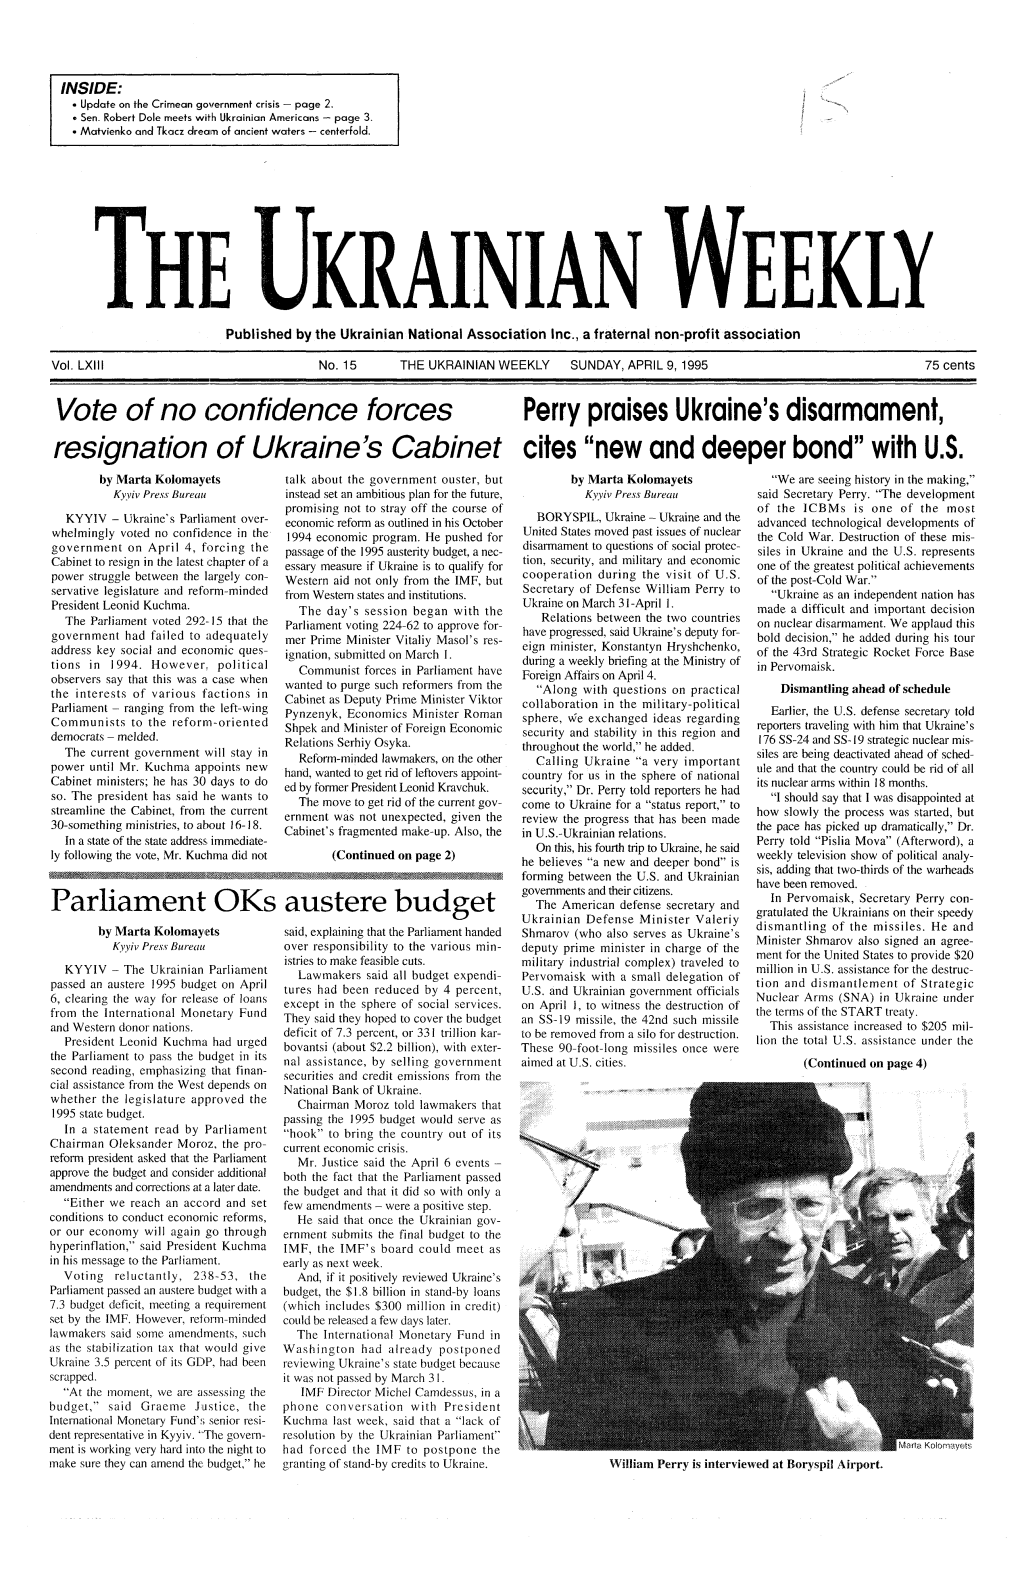 The Ukrainian Weekly 1995, No.15